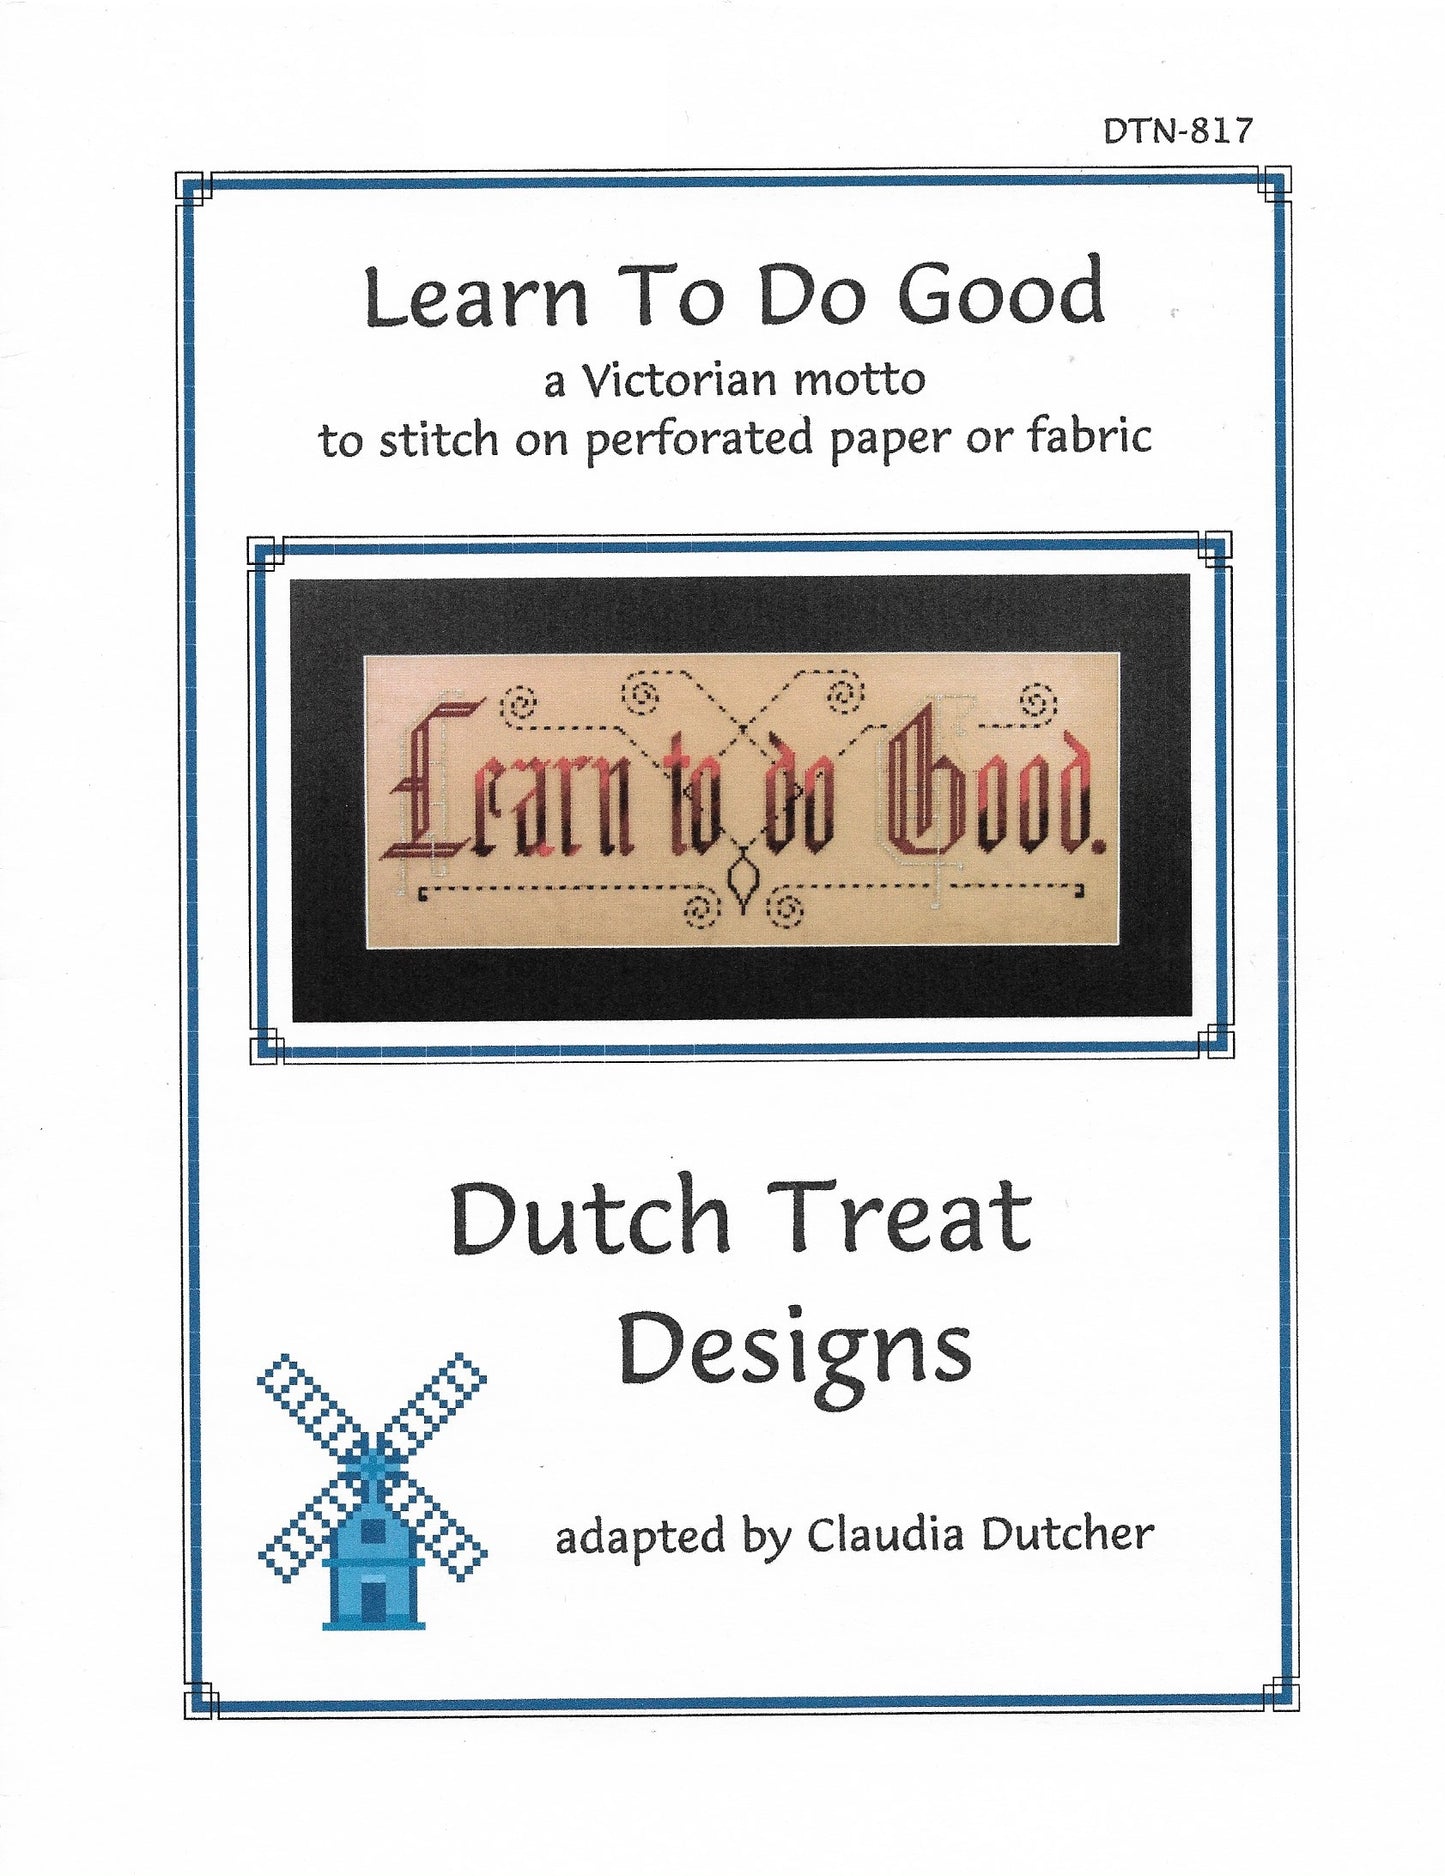 Dutch Treat Designs Learn to do good cross stitch pattern